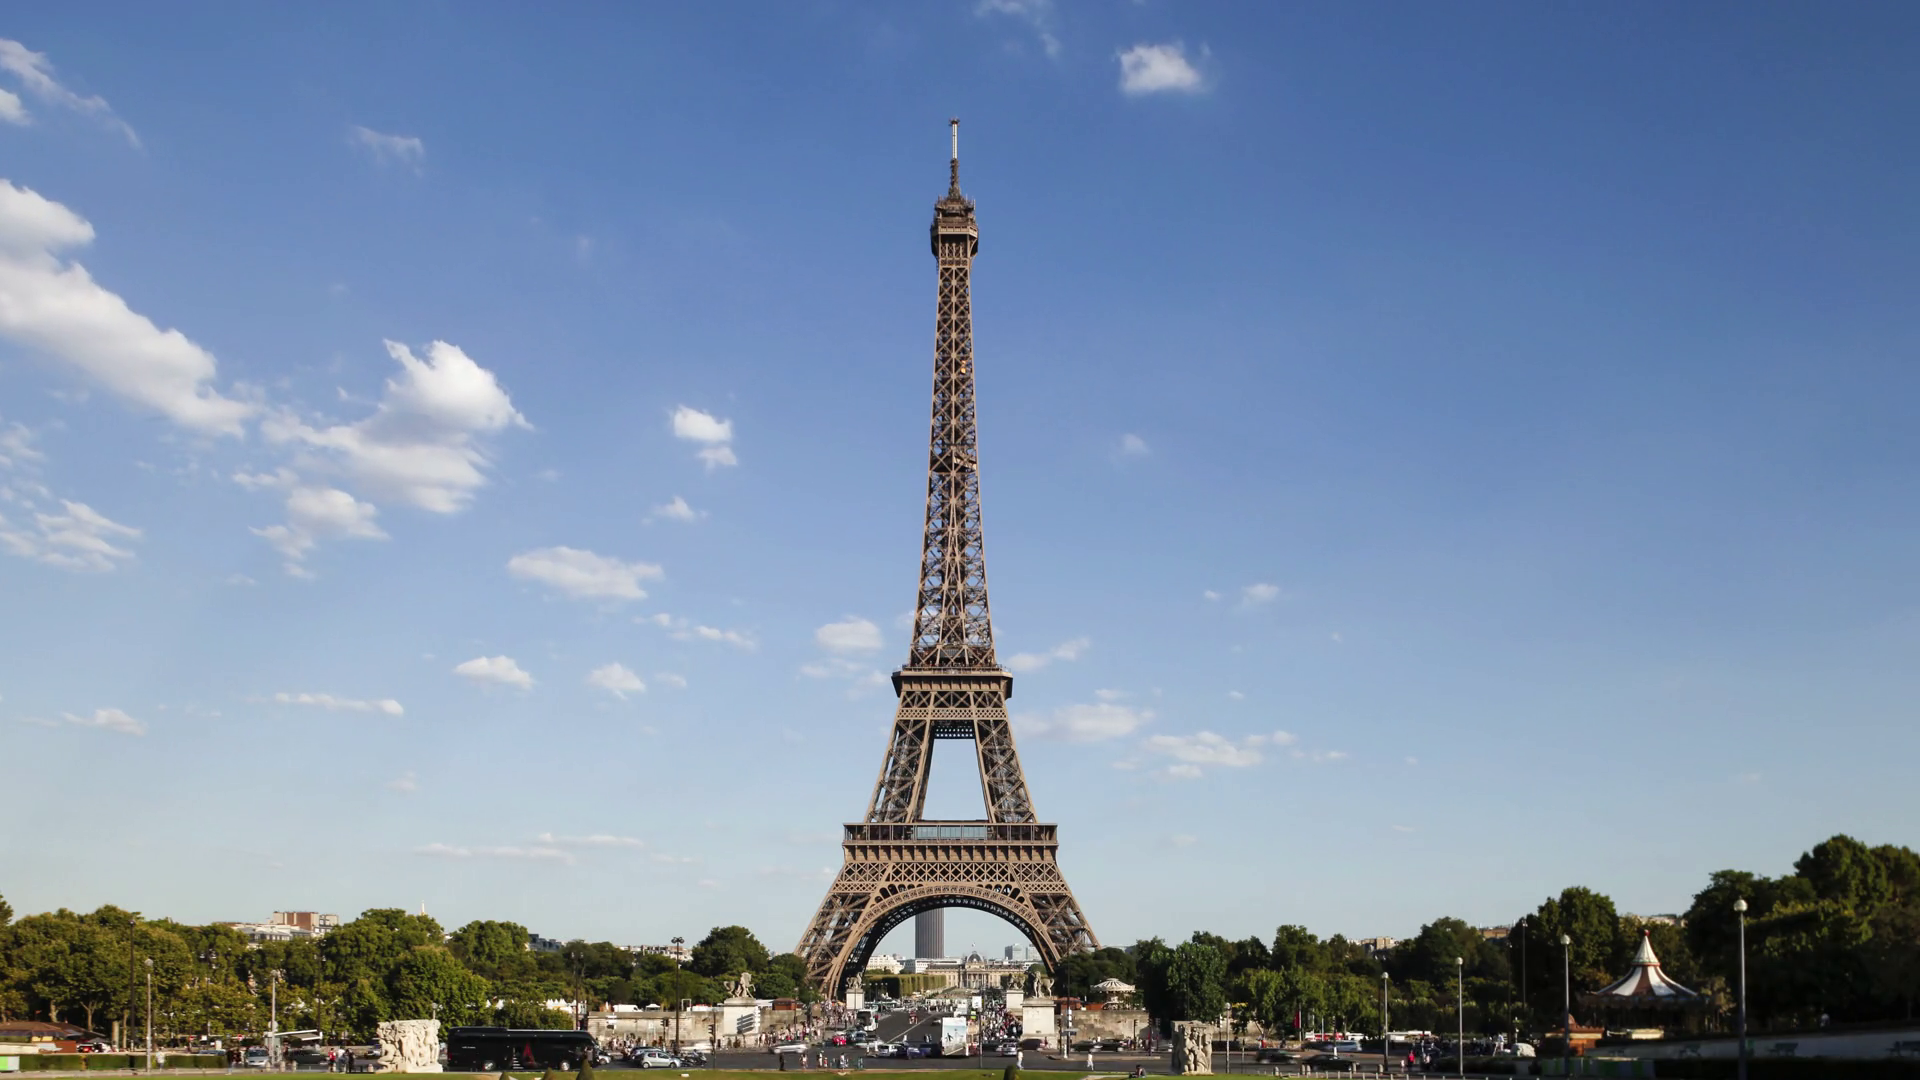 PARIS, FRANCE - August 25, 2016: The Eiffel Tower landmark ...